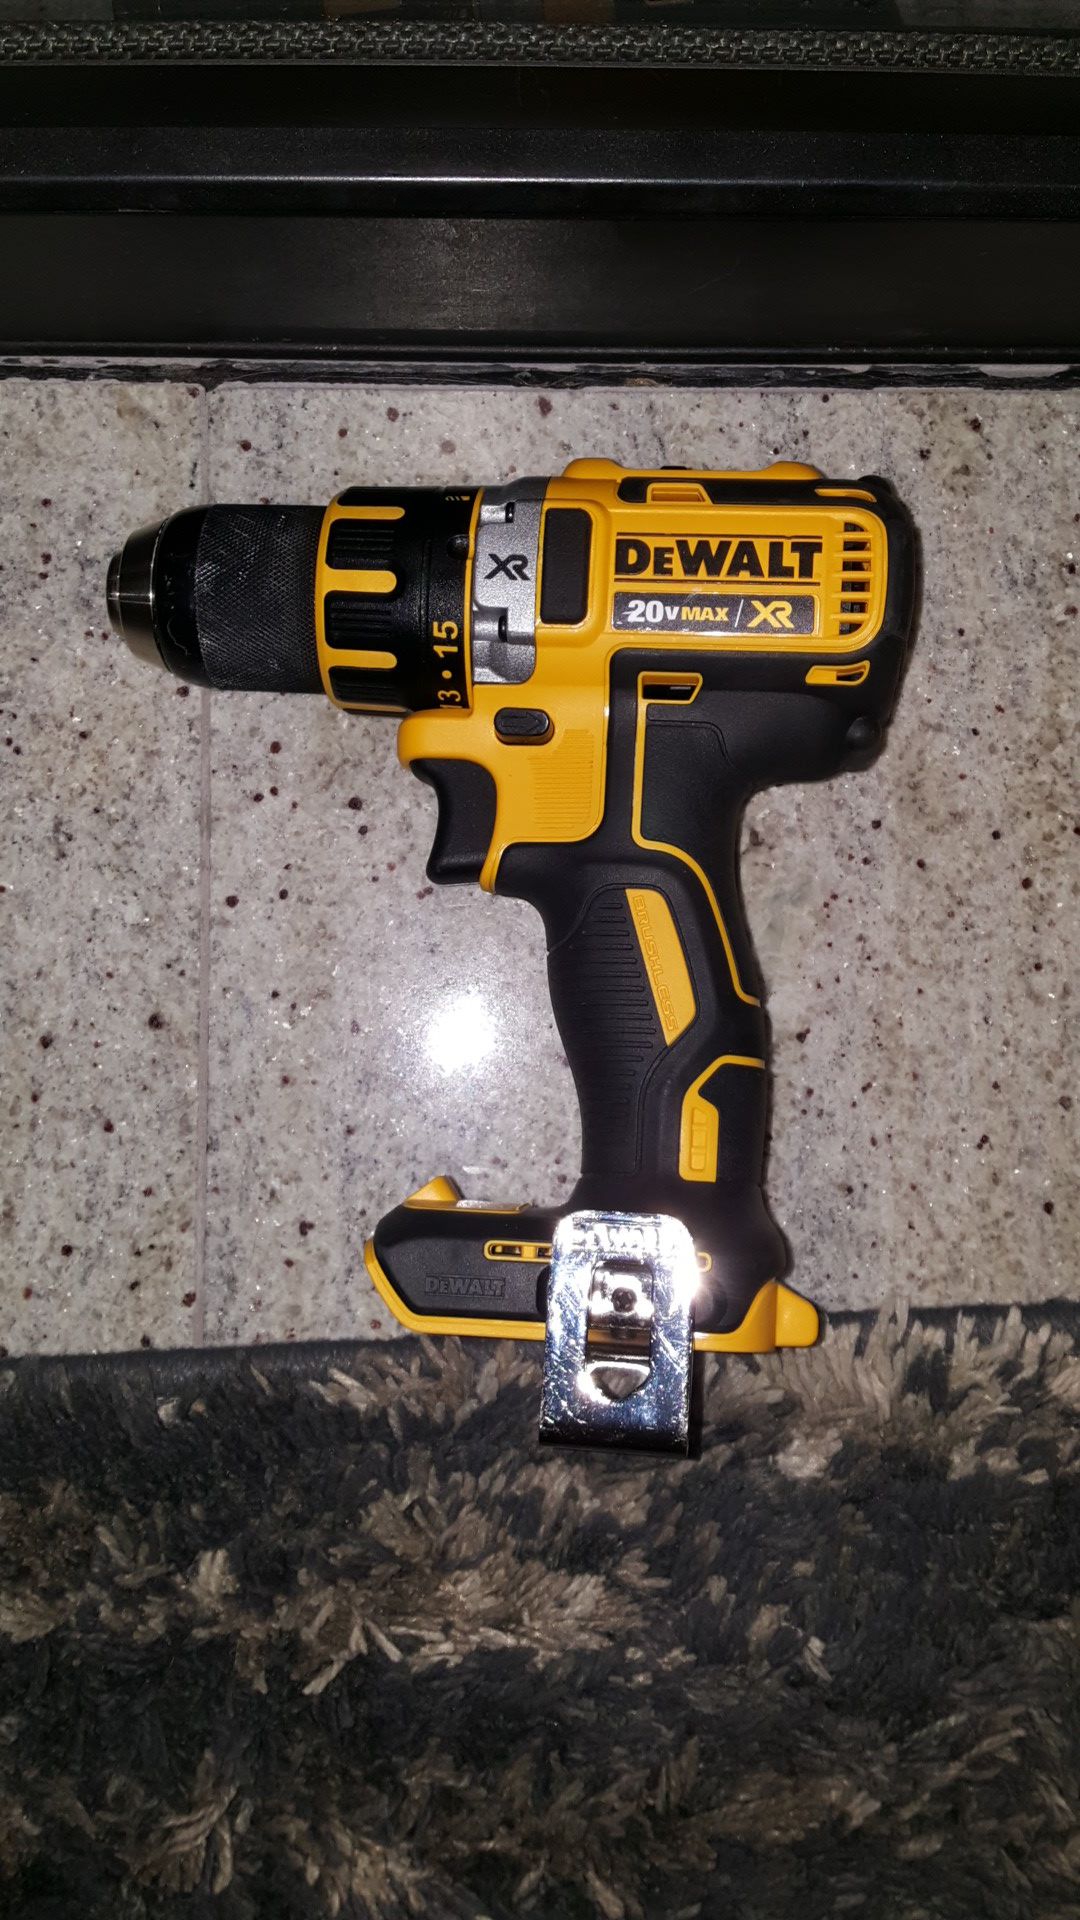 Dewalt DCD790 1/2" BRUSHLESS 20 volt drill driver